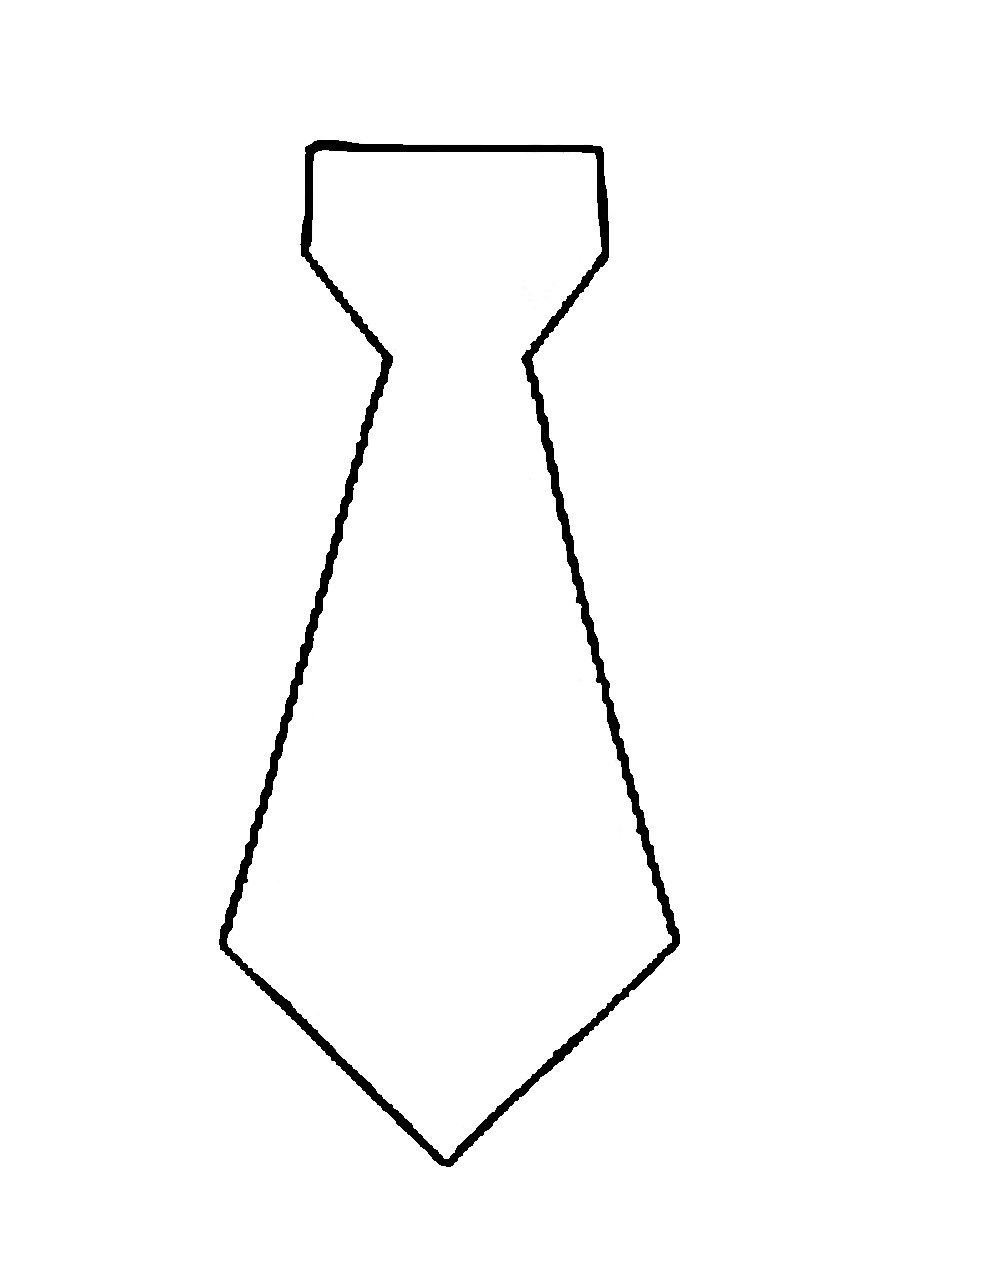 Необходимые материалы при создании бумажного галстука